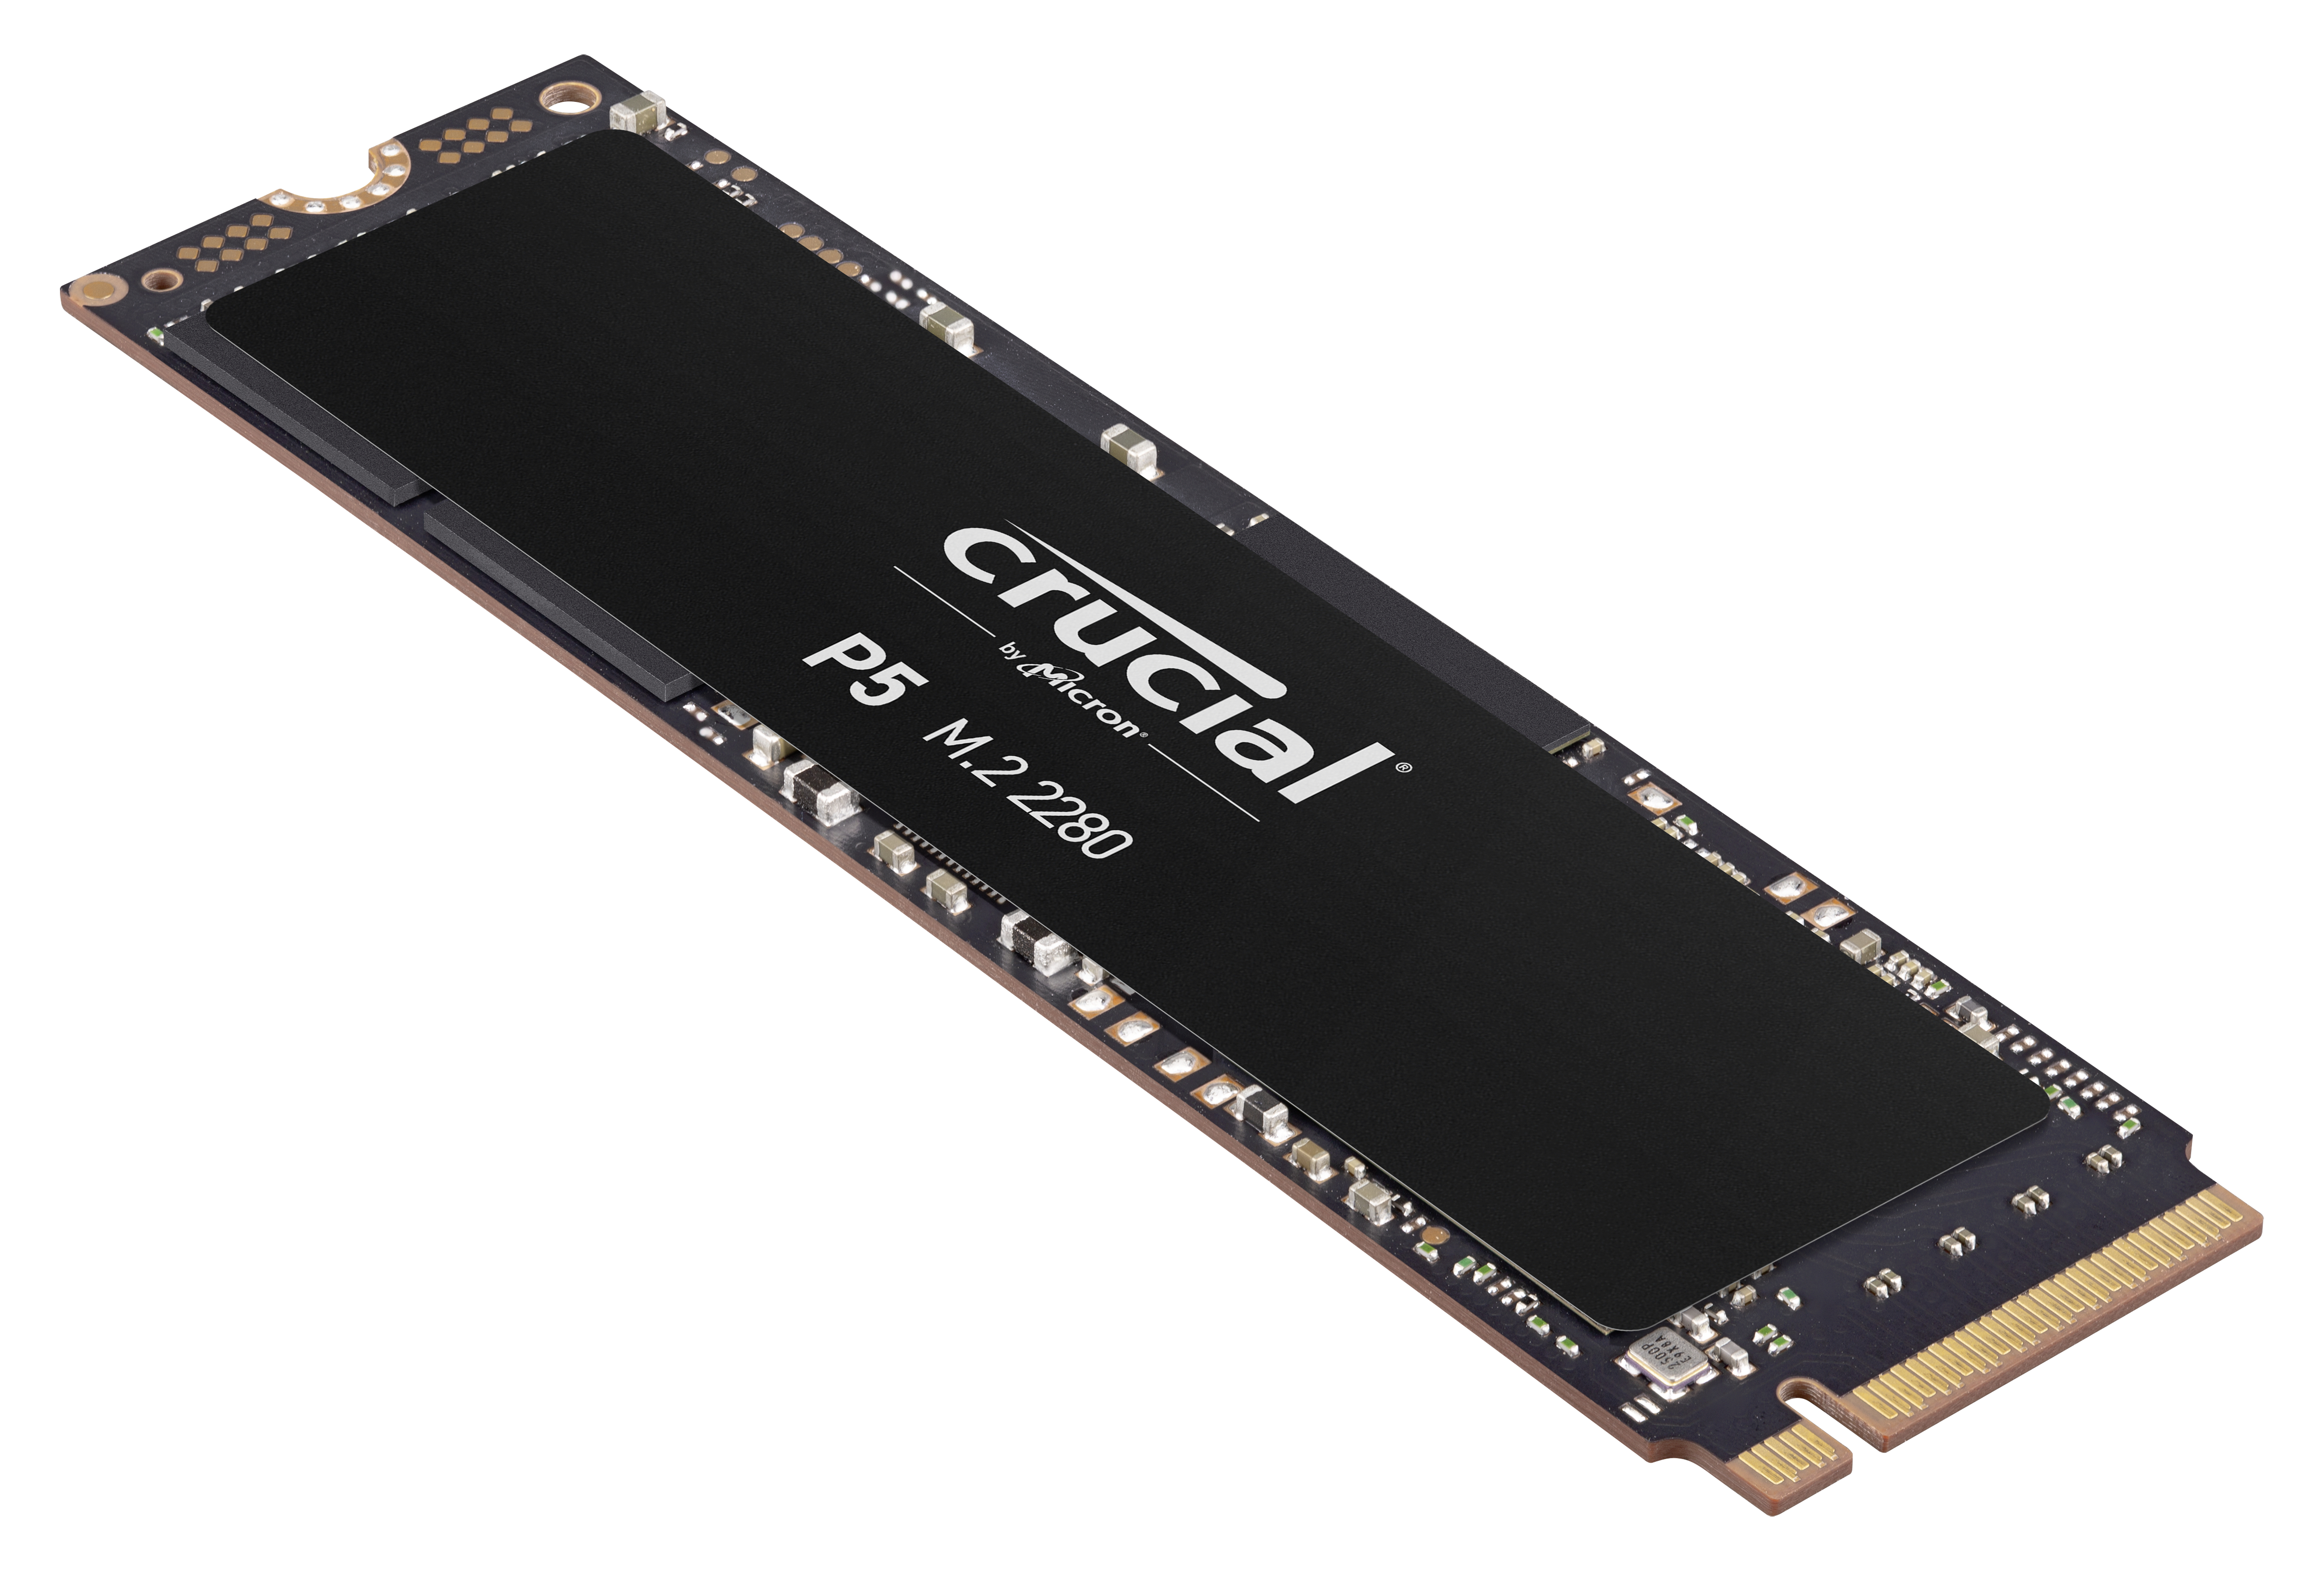 CRUCIAL P5 Festplatte, 1 TB via PCIe, SSD intern M.2